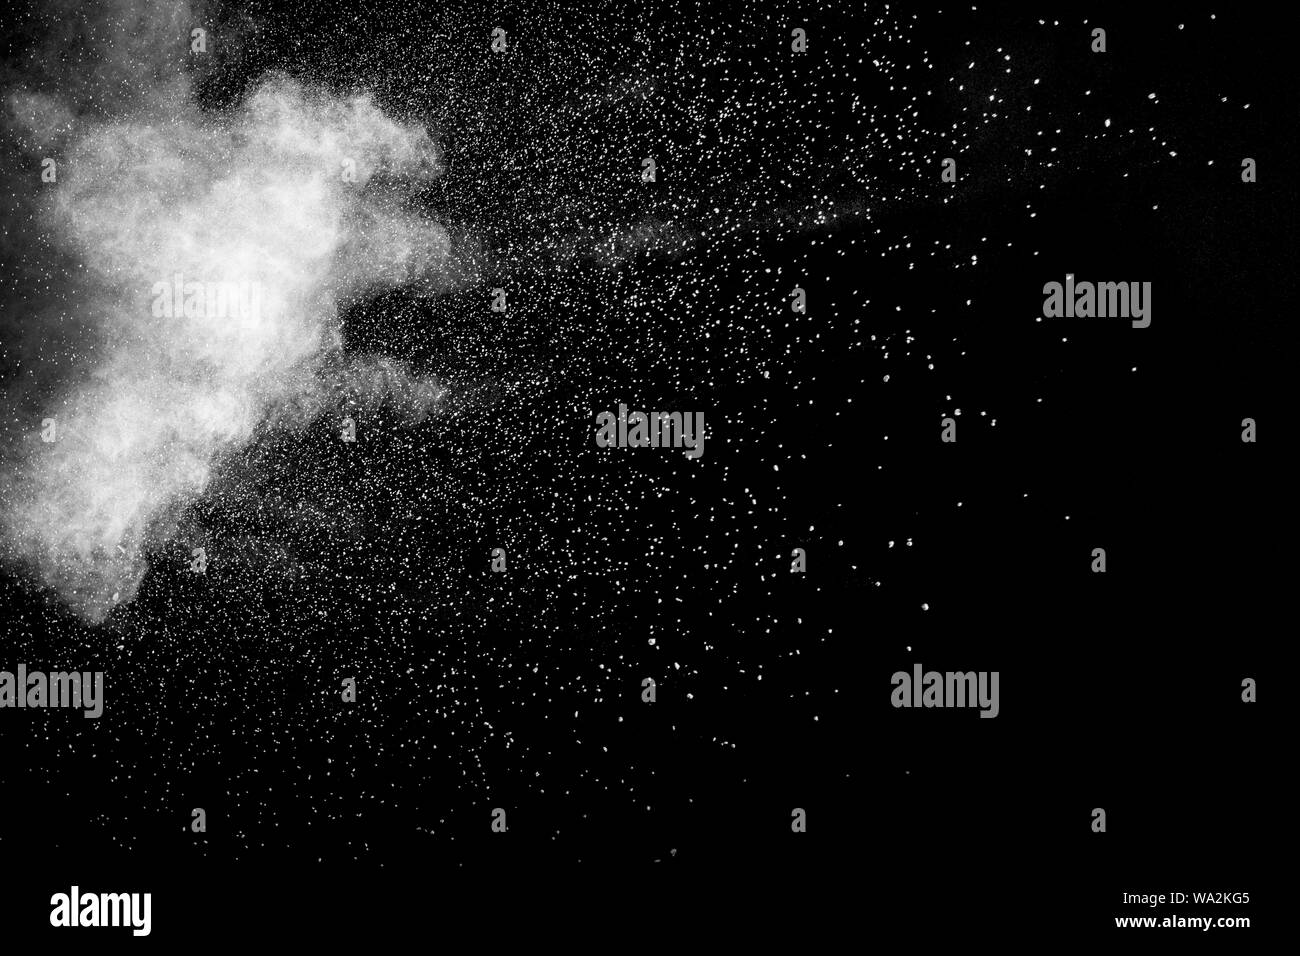 Bizarre forms of white powder explosion cloud against black background.White dust particles splash. Stock Photo